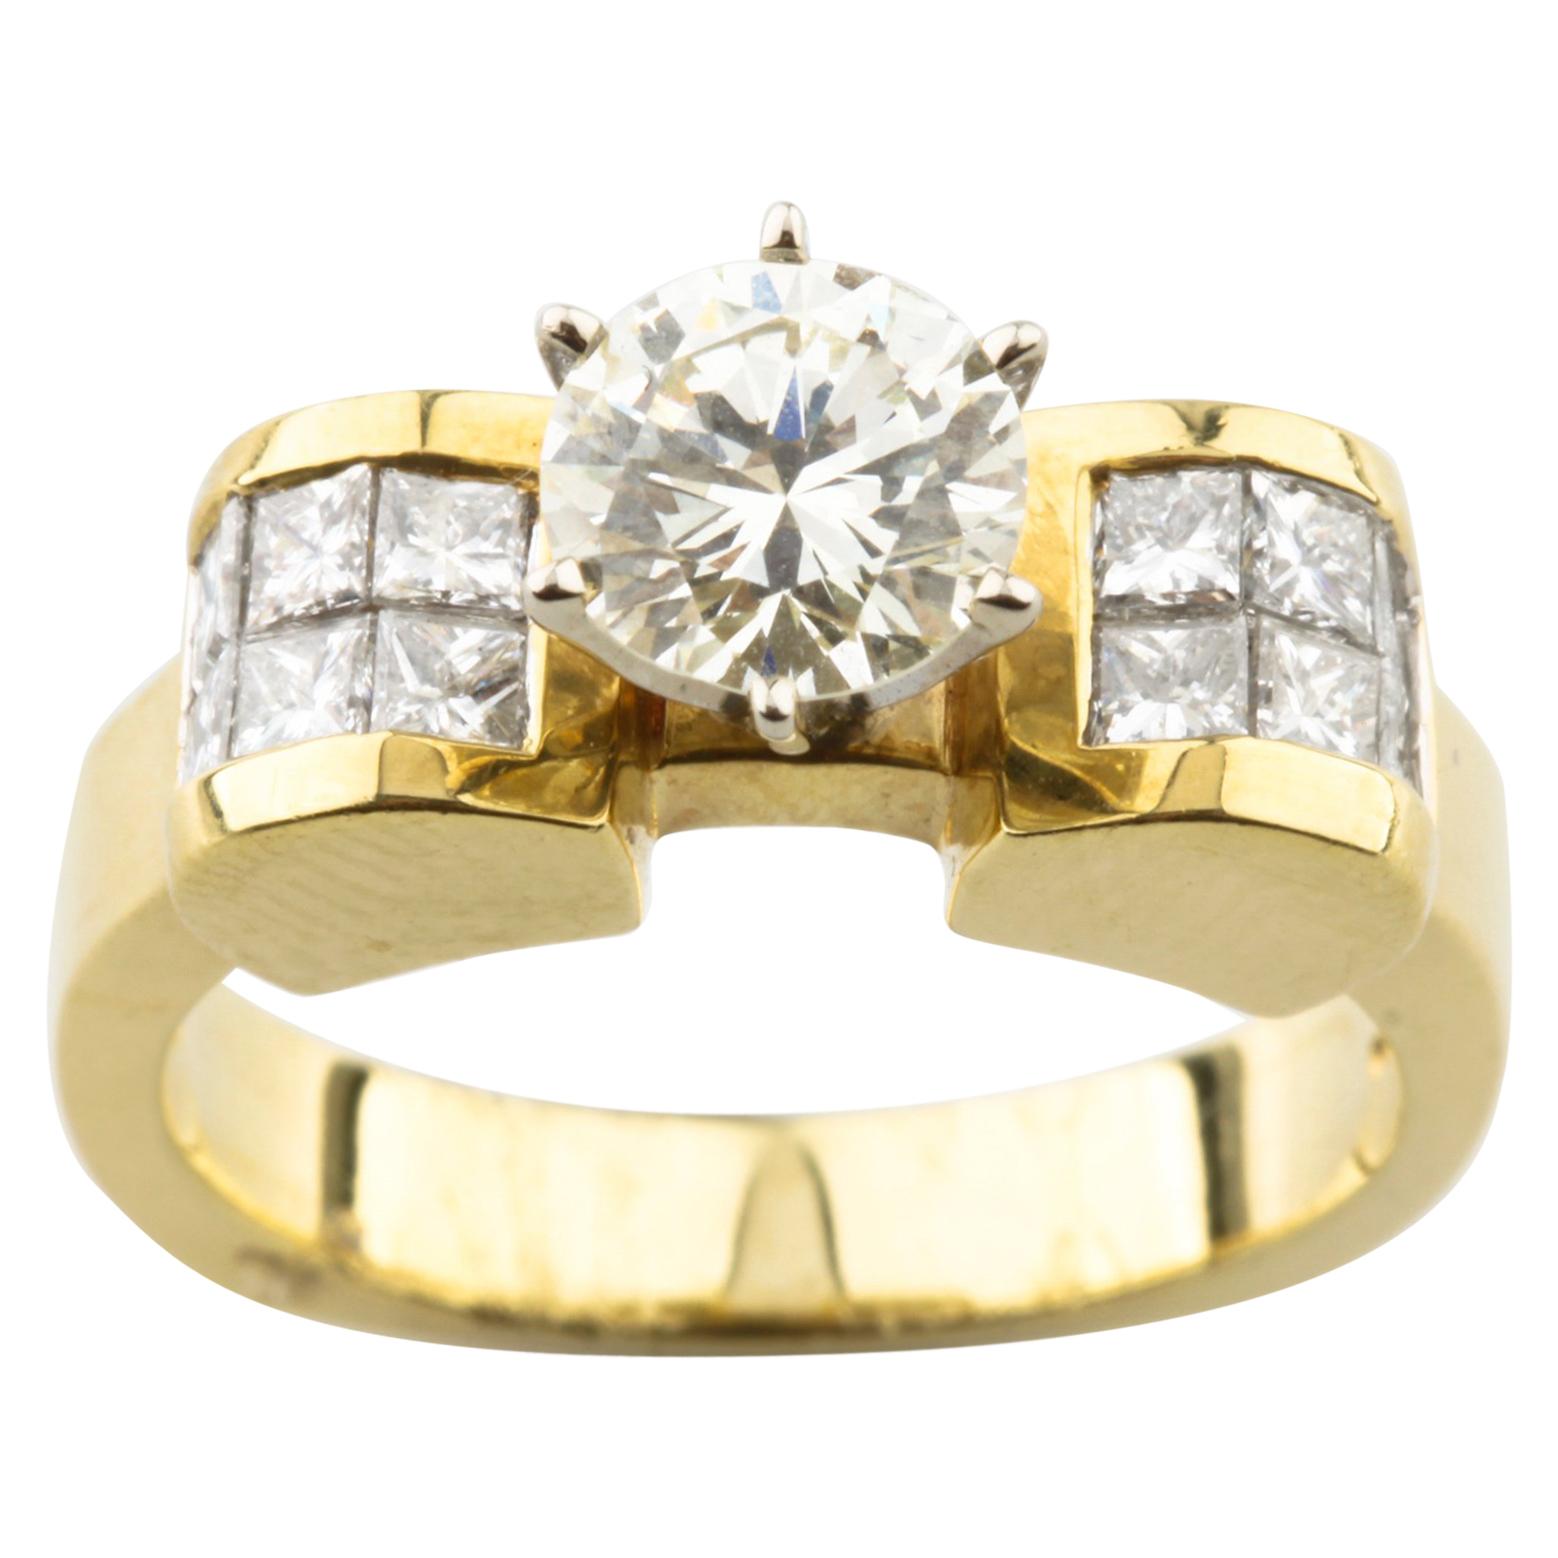 83 Carat Diamond 14 Karat Yellow Gold Engagement Ring For Sale At 1stdibs 14 Carat Diamond